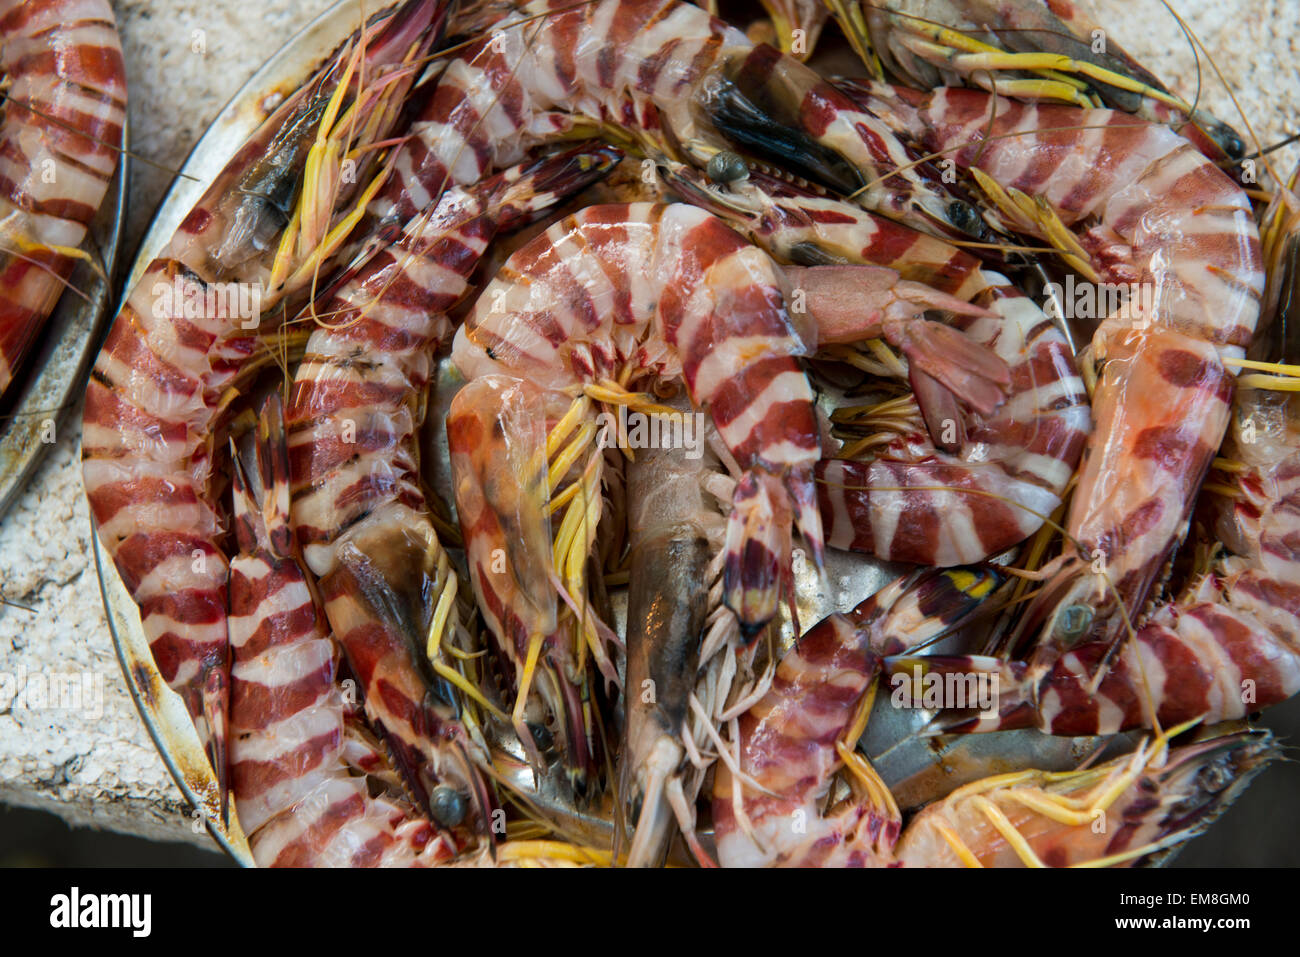 Primer plano de un fresco pescado langostino. Como camarón, pero de mayor  tamaño Fotografía de stock - Alamy